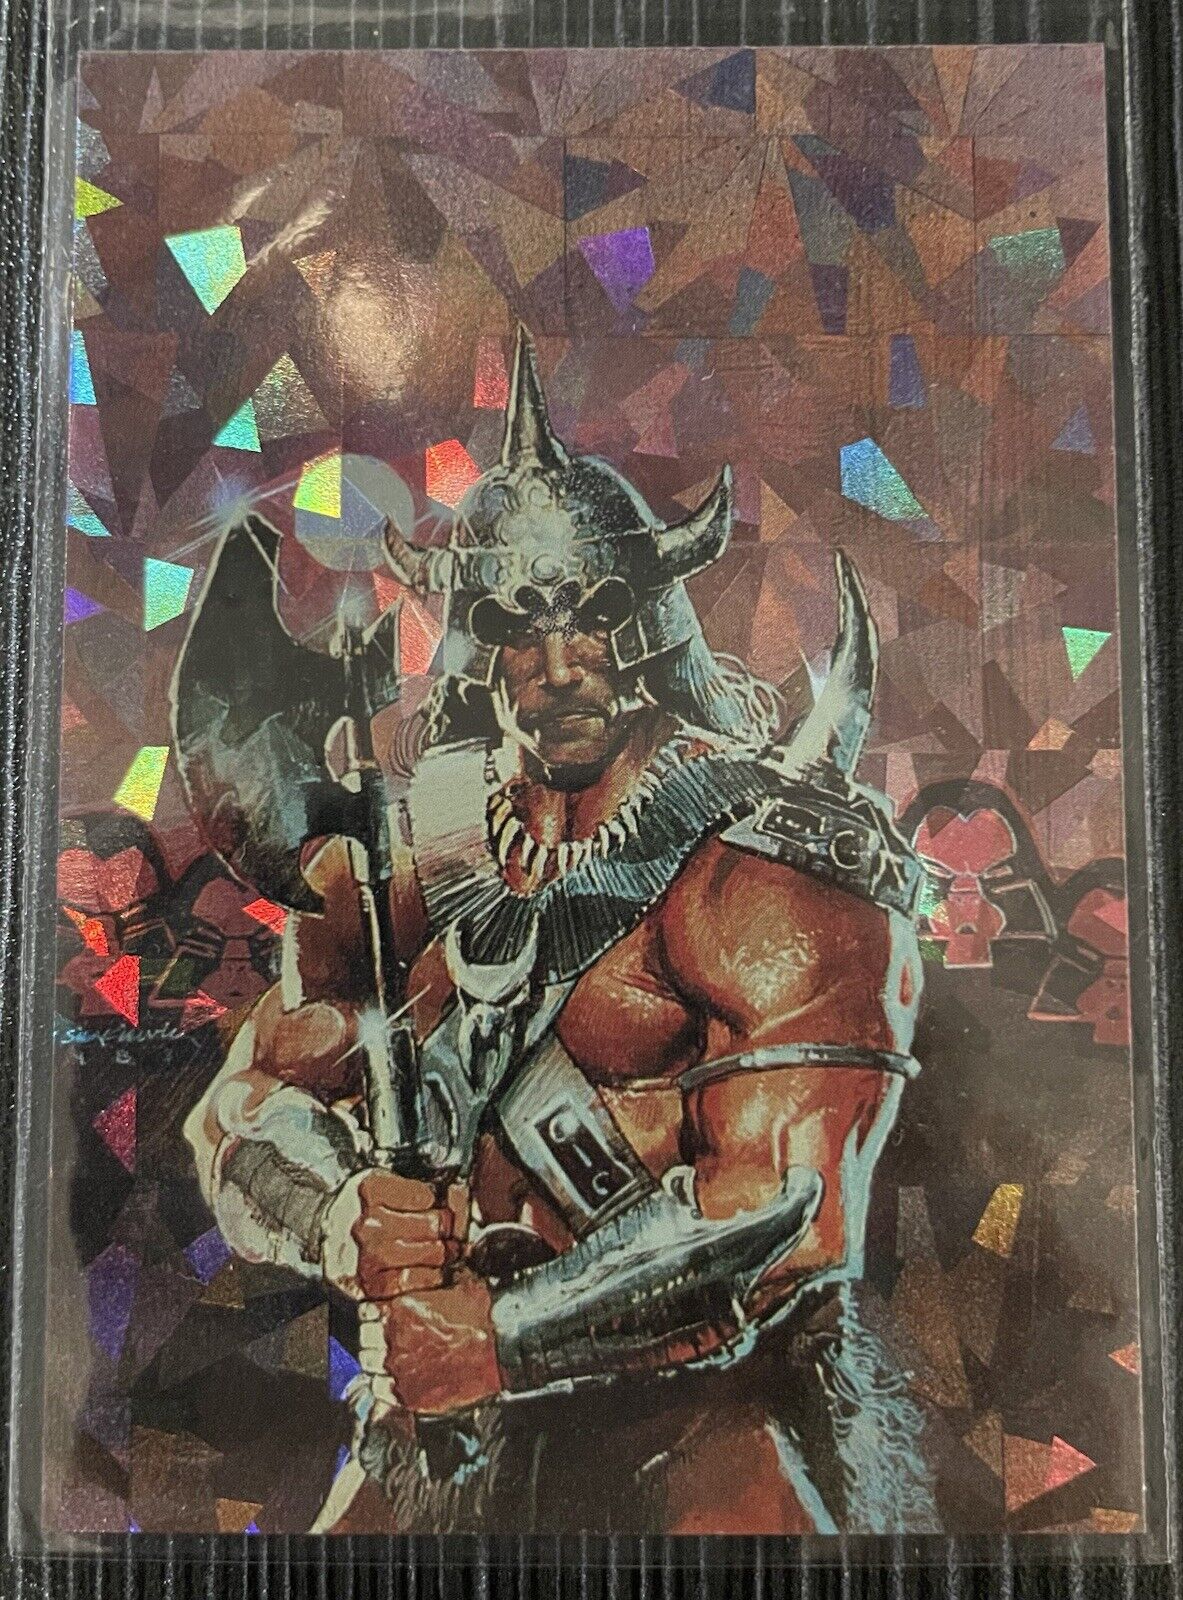 1993 Conan Collector Cards by Hasbro